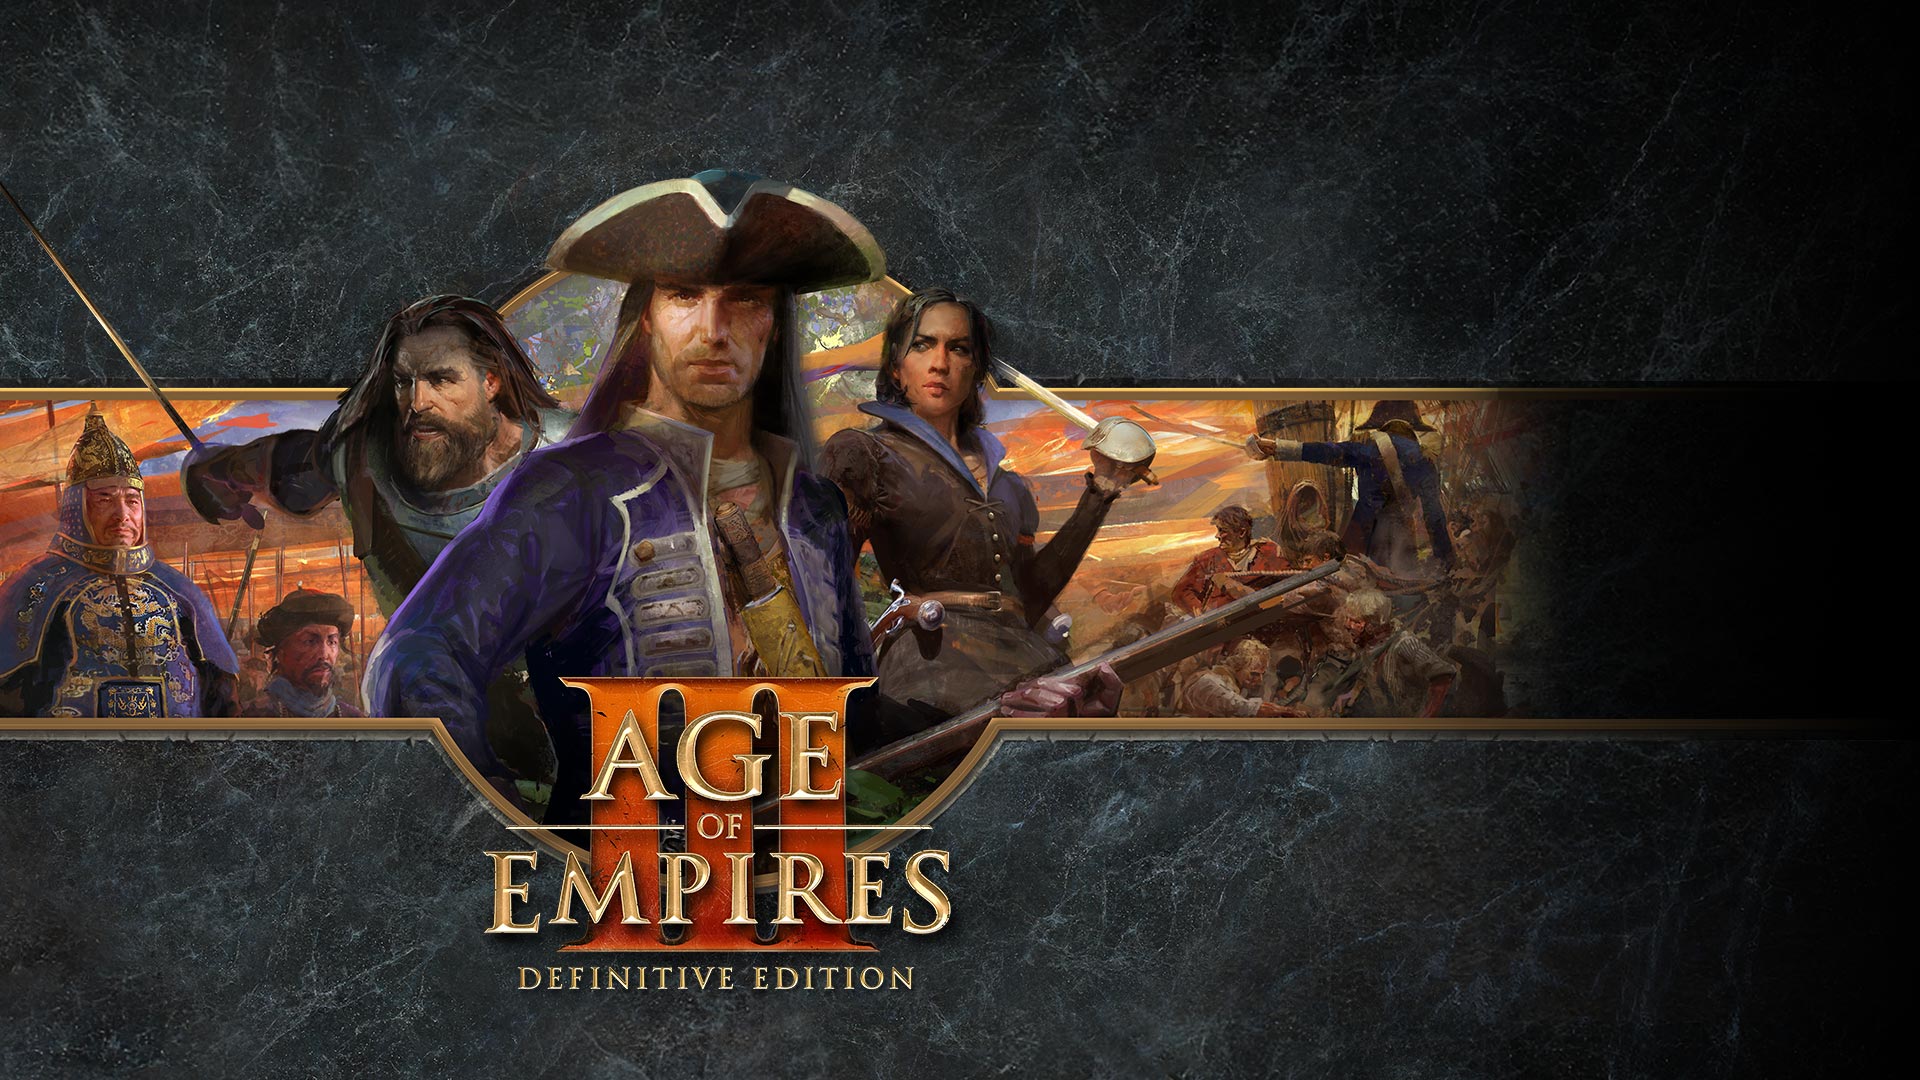 Age of Empires III: Definitive Edition, pózující postavy